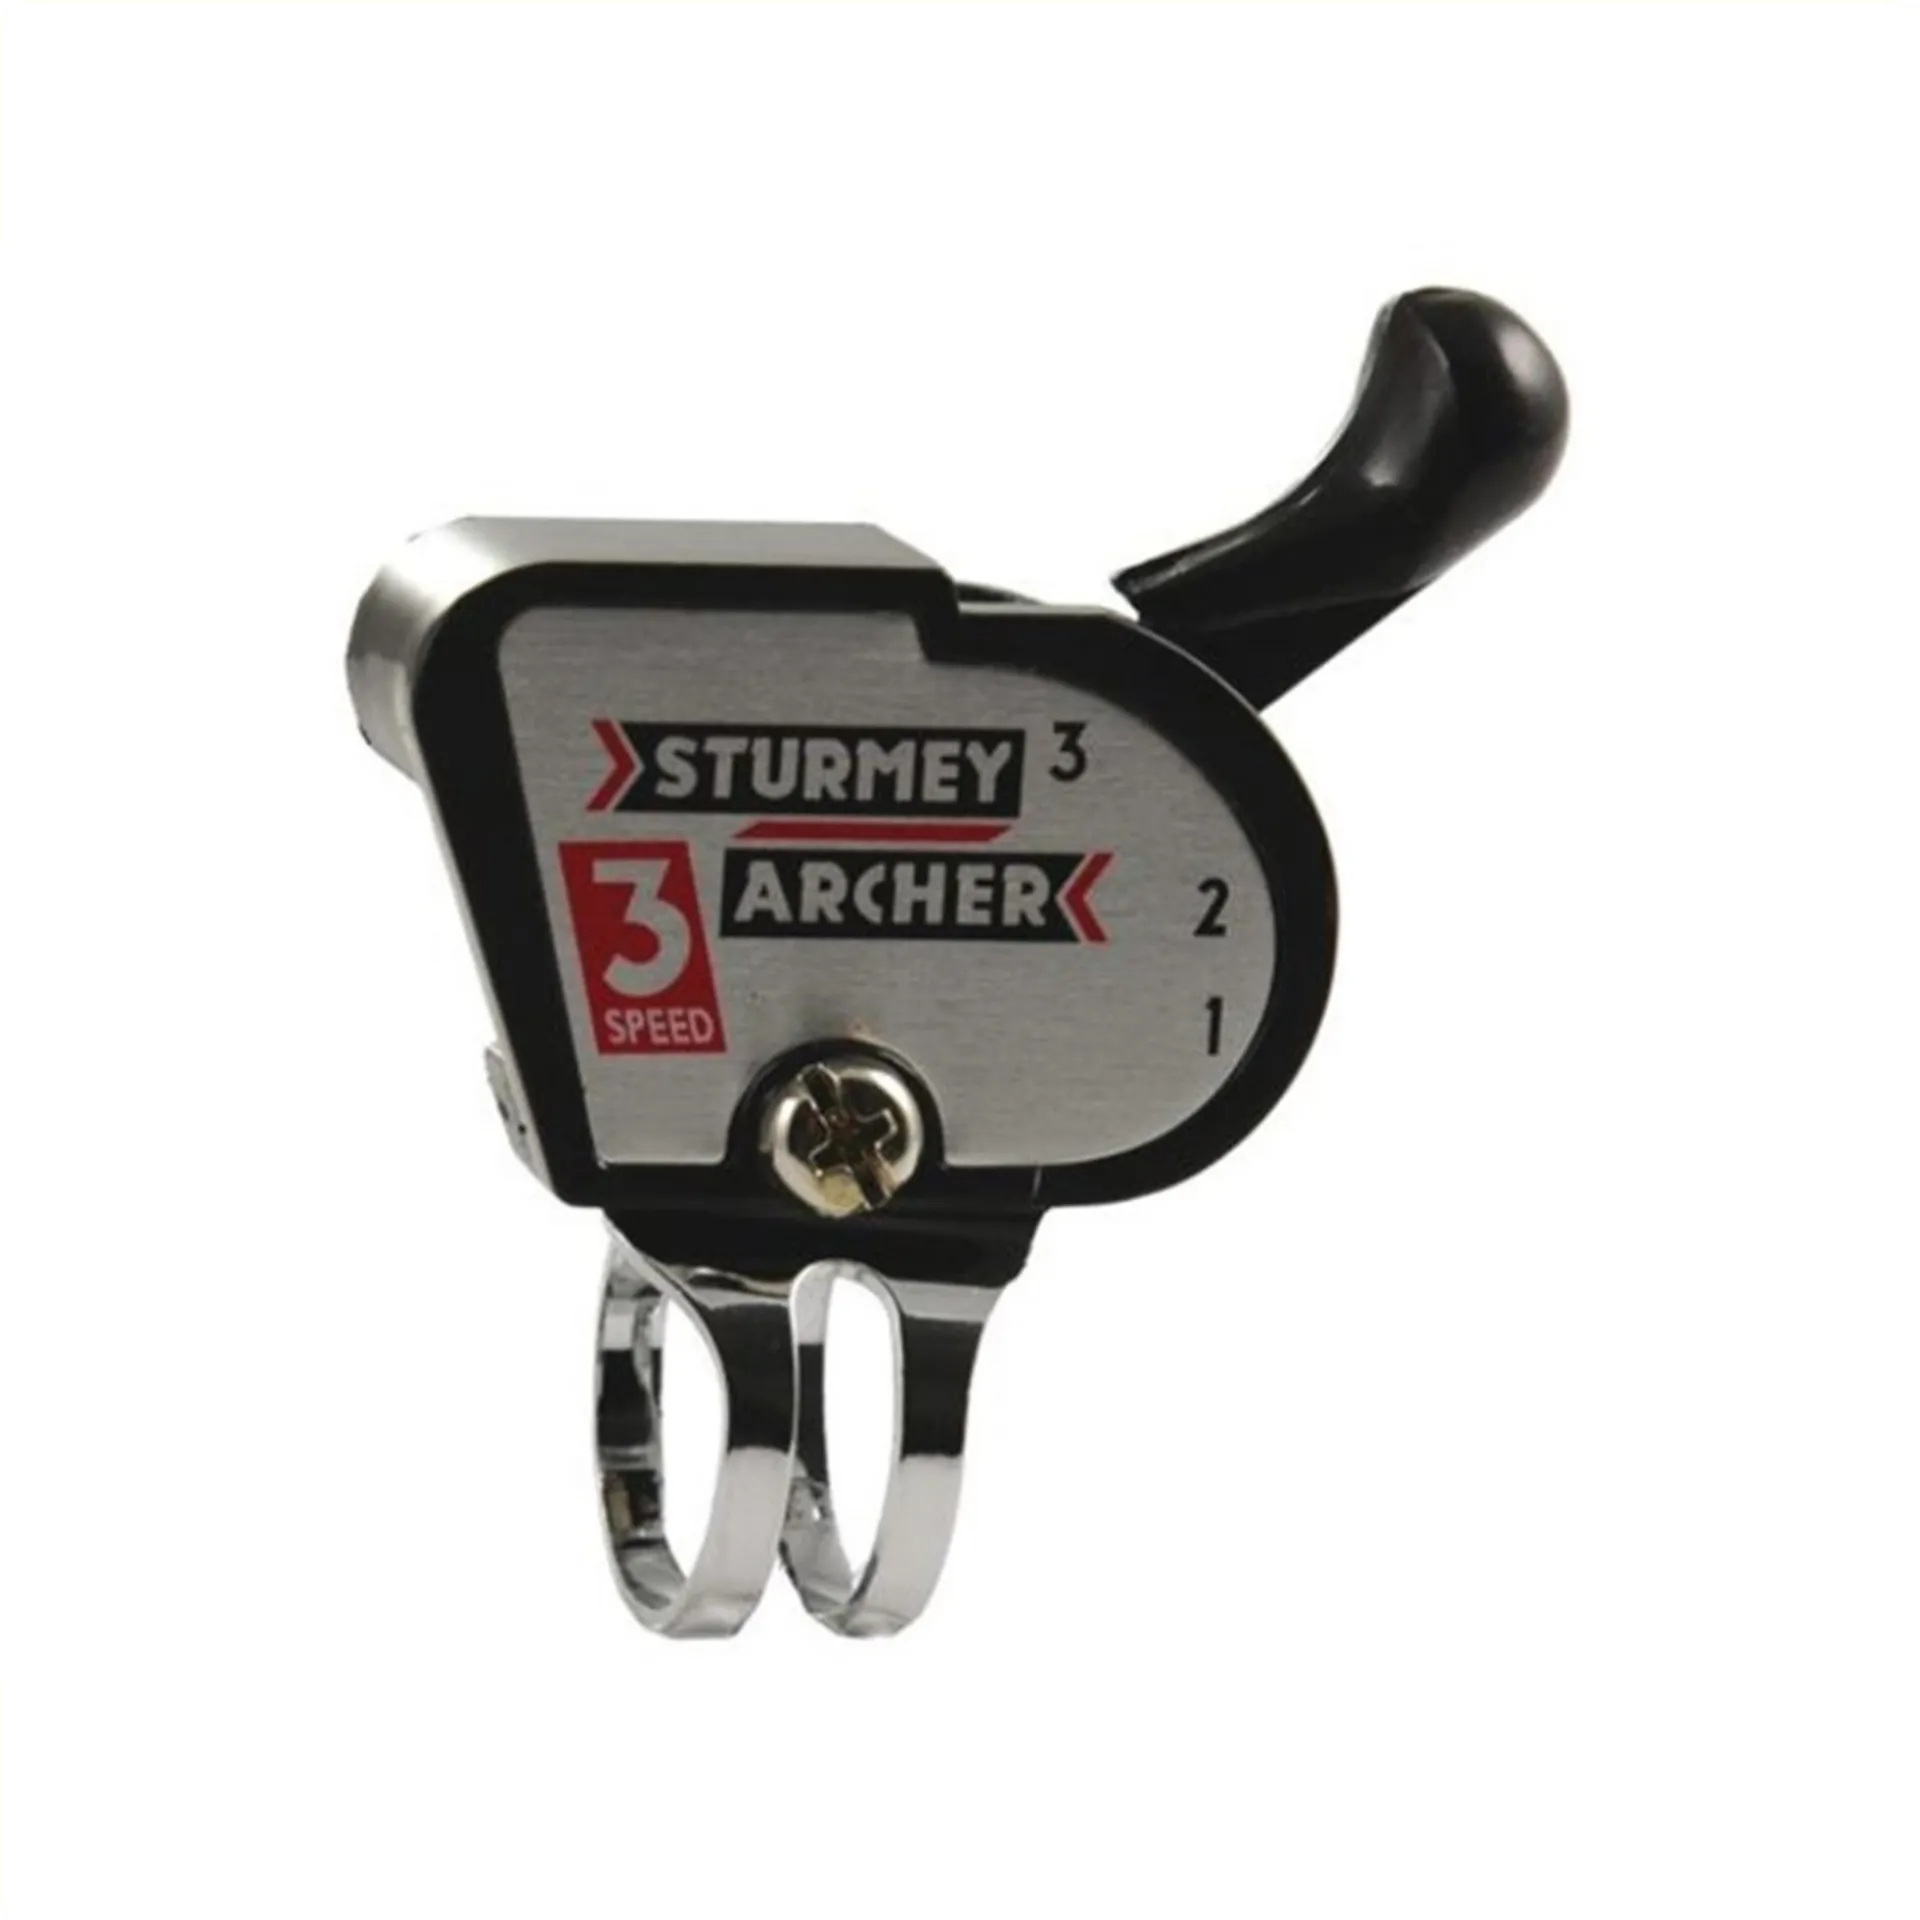 Sturmey Archer duimversteller 3v (foto kan afwijken)